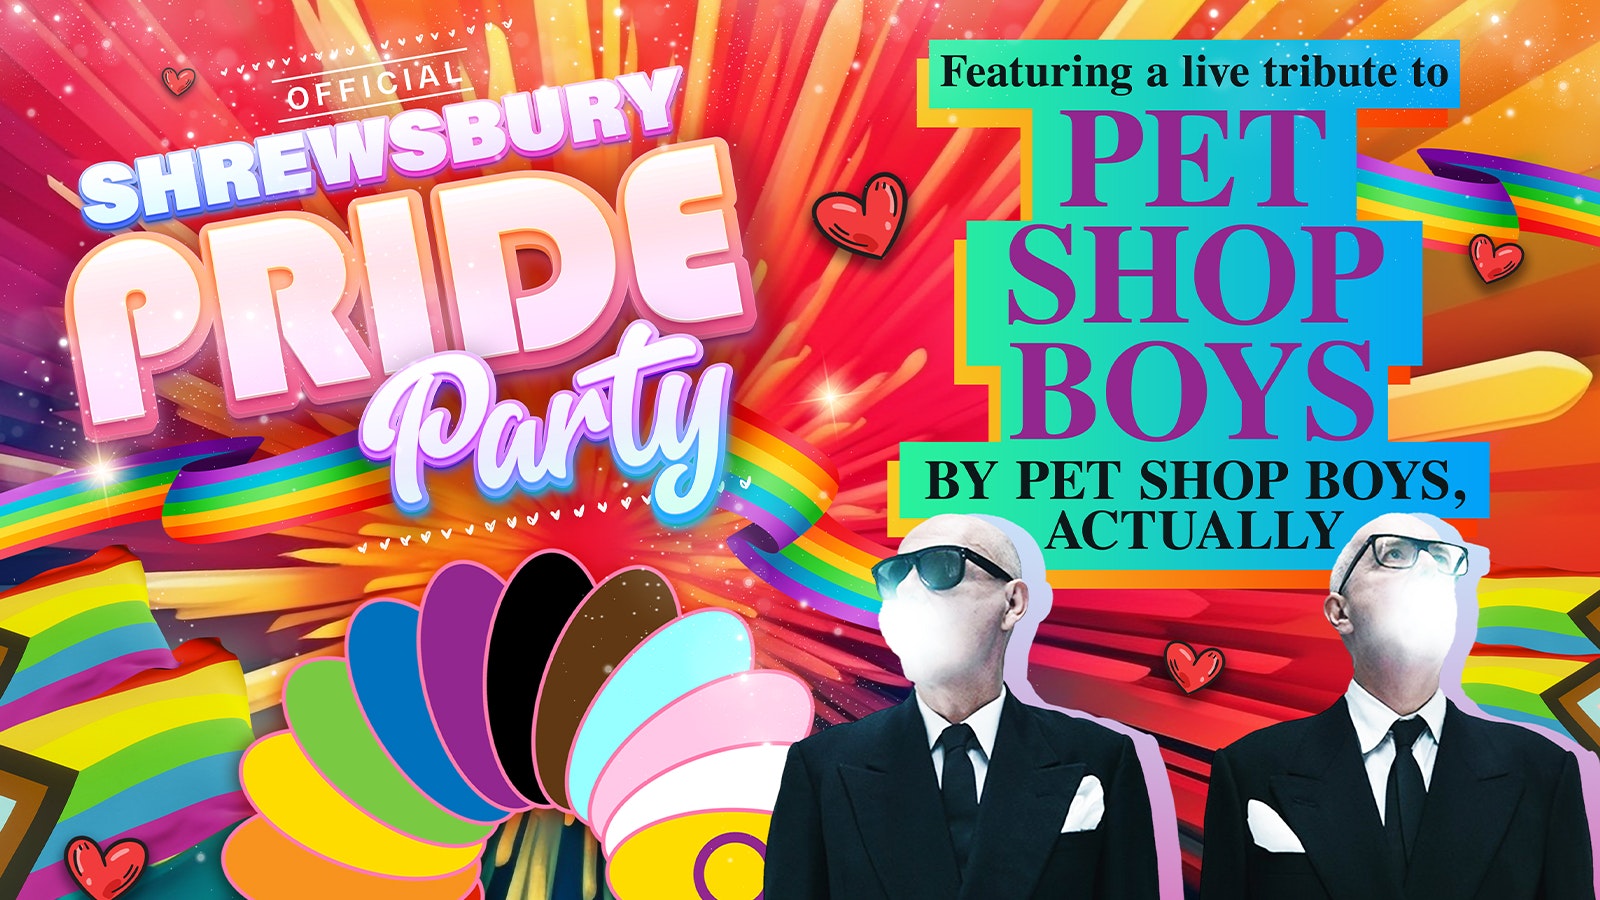 🏳️‍🌈 Pet Shop Boys, Actually – Official Shrewsbury Pride Party 🏳️‍⚧️